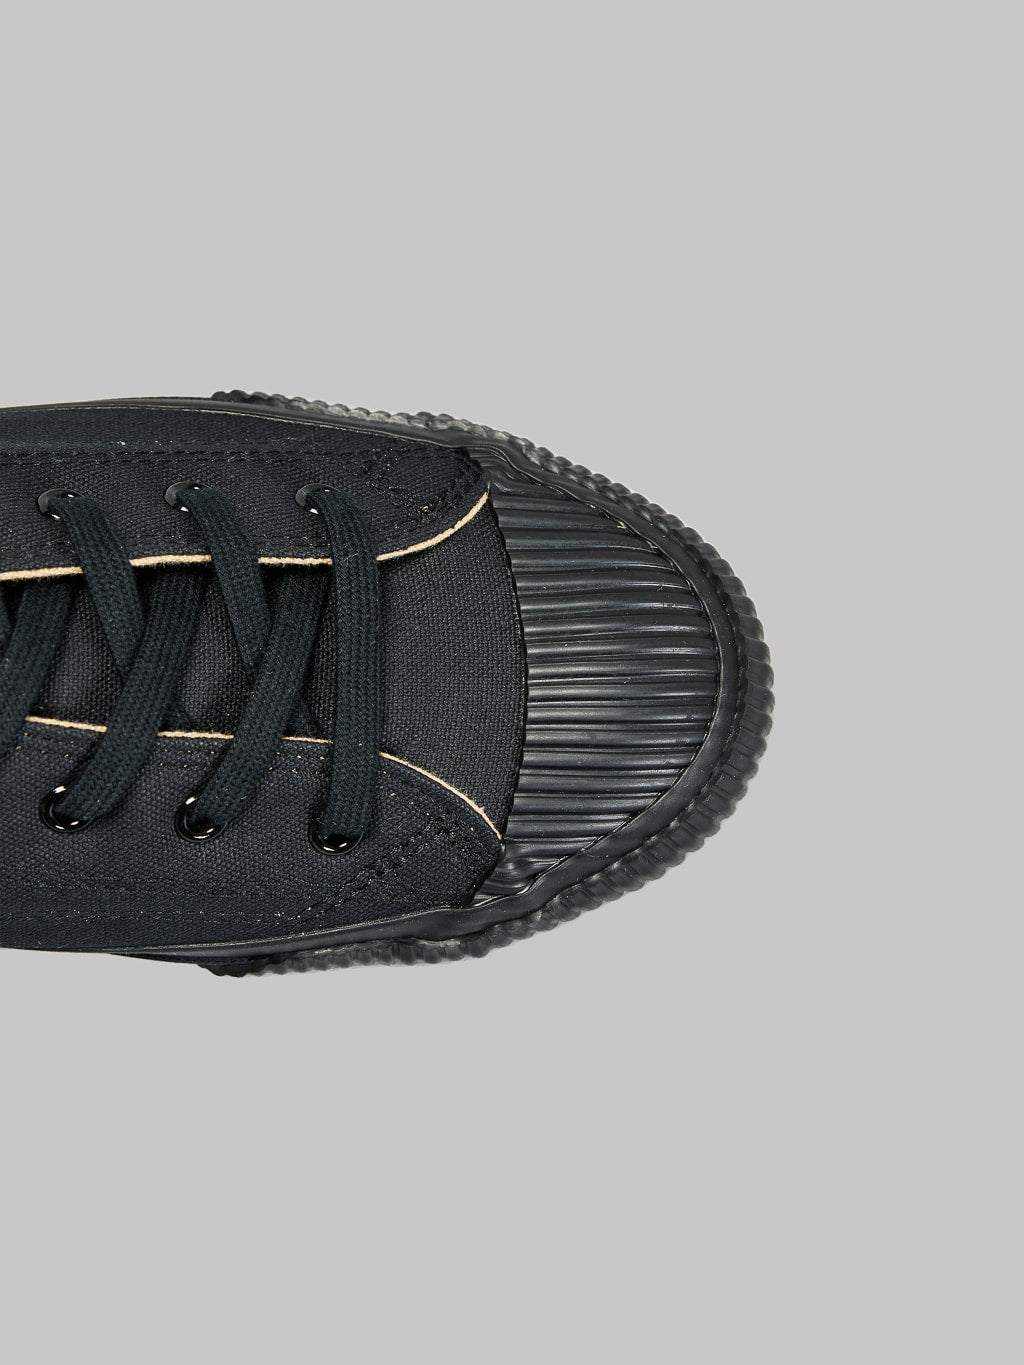 Pras shellcap low sneakers kuro black reinforced toe